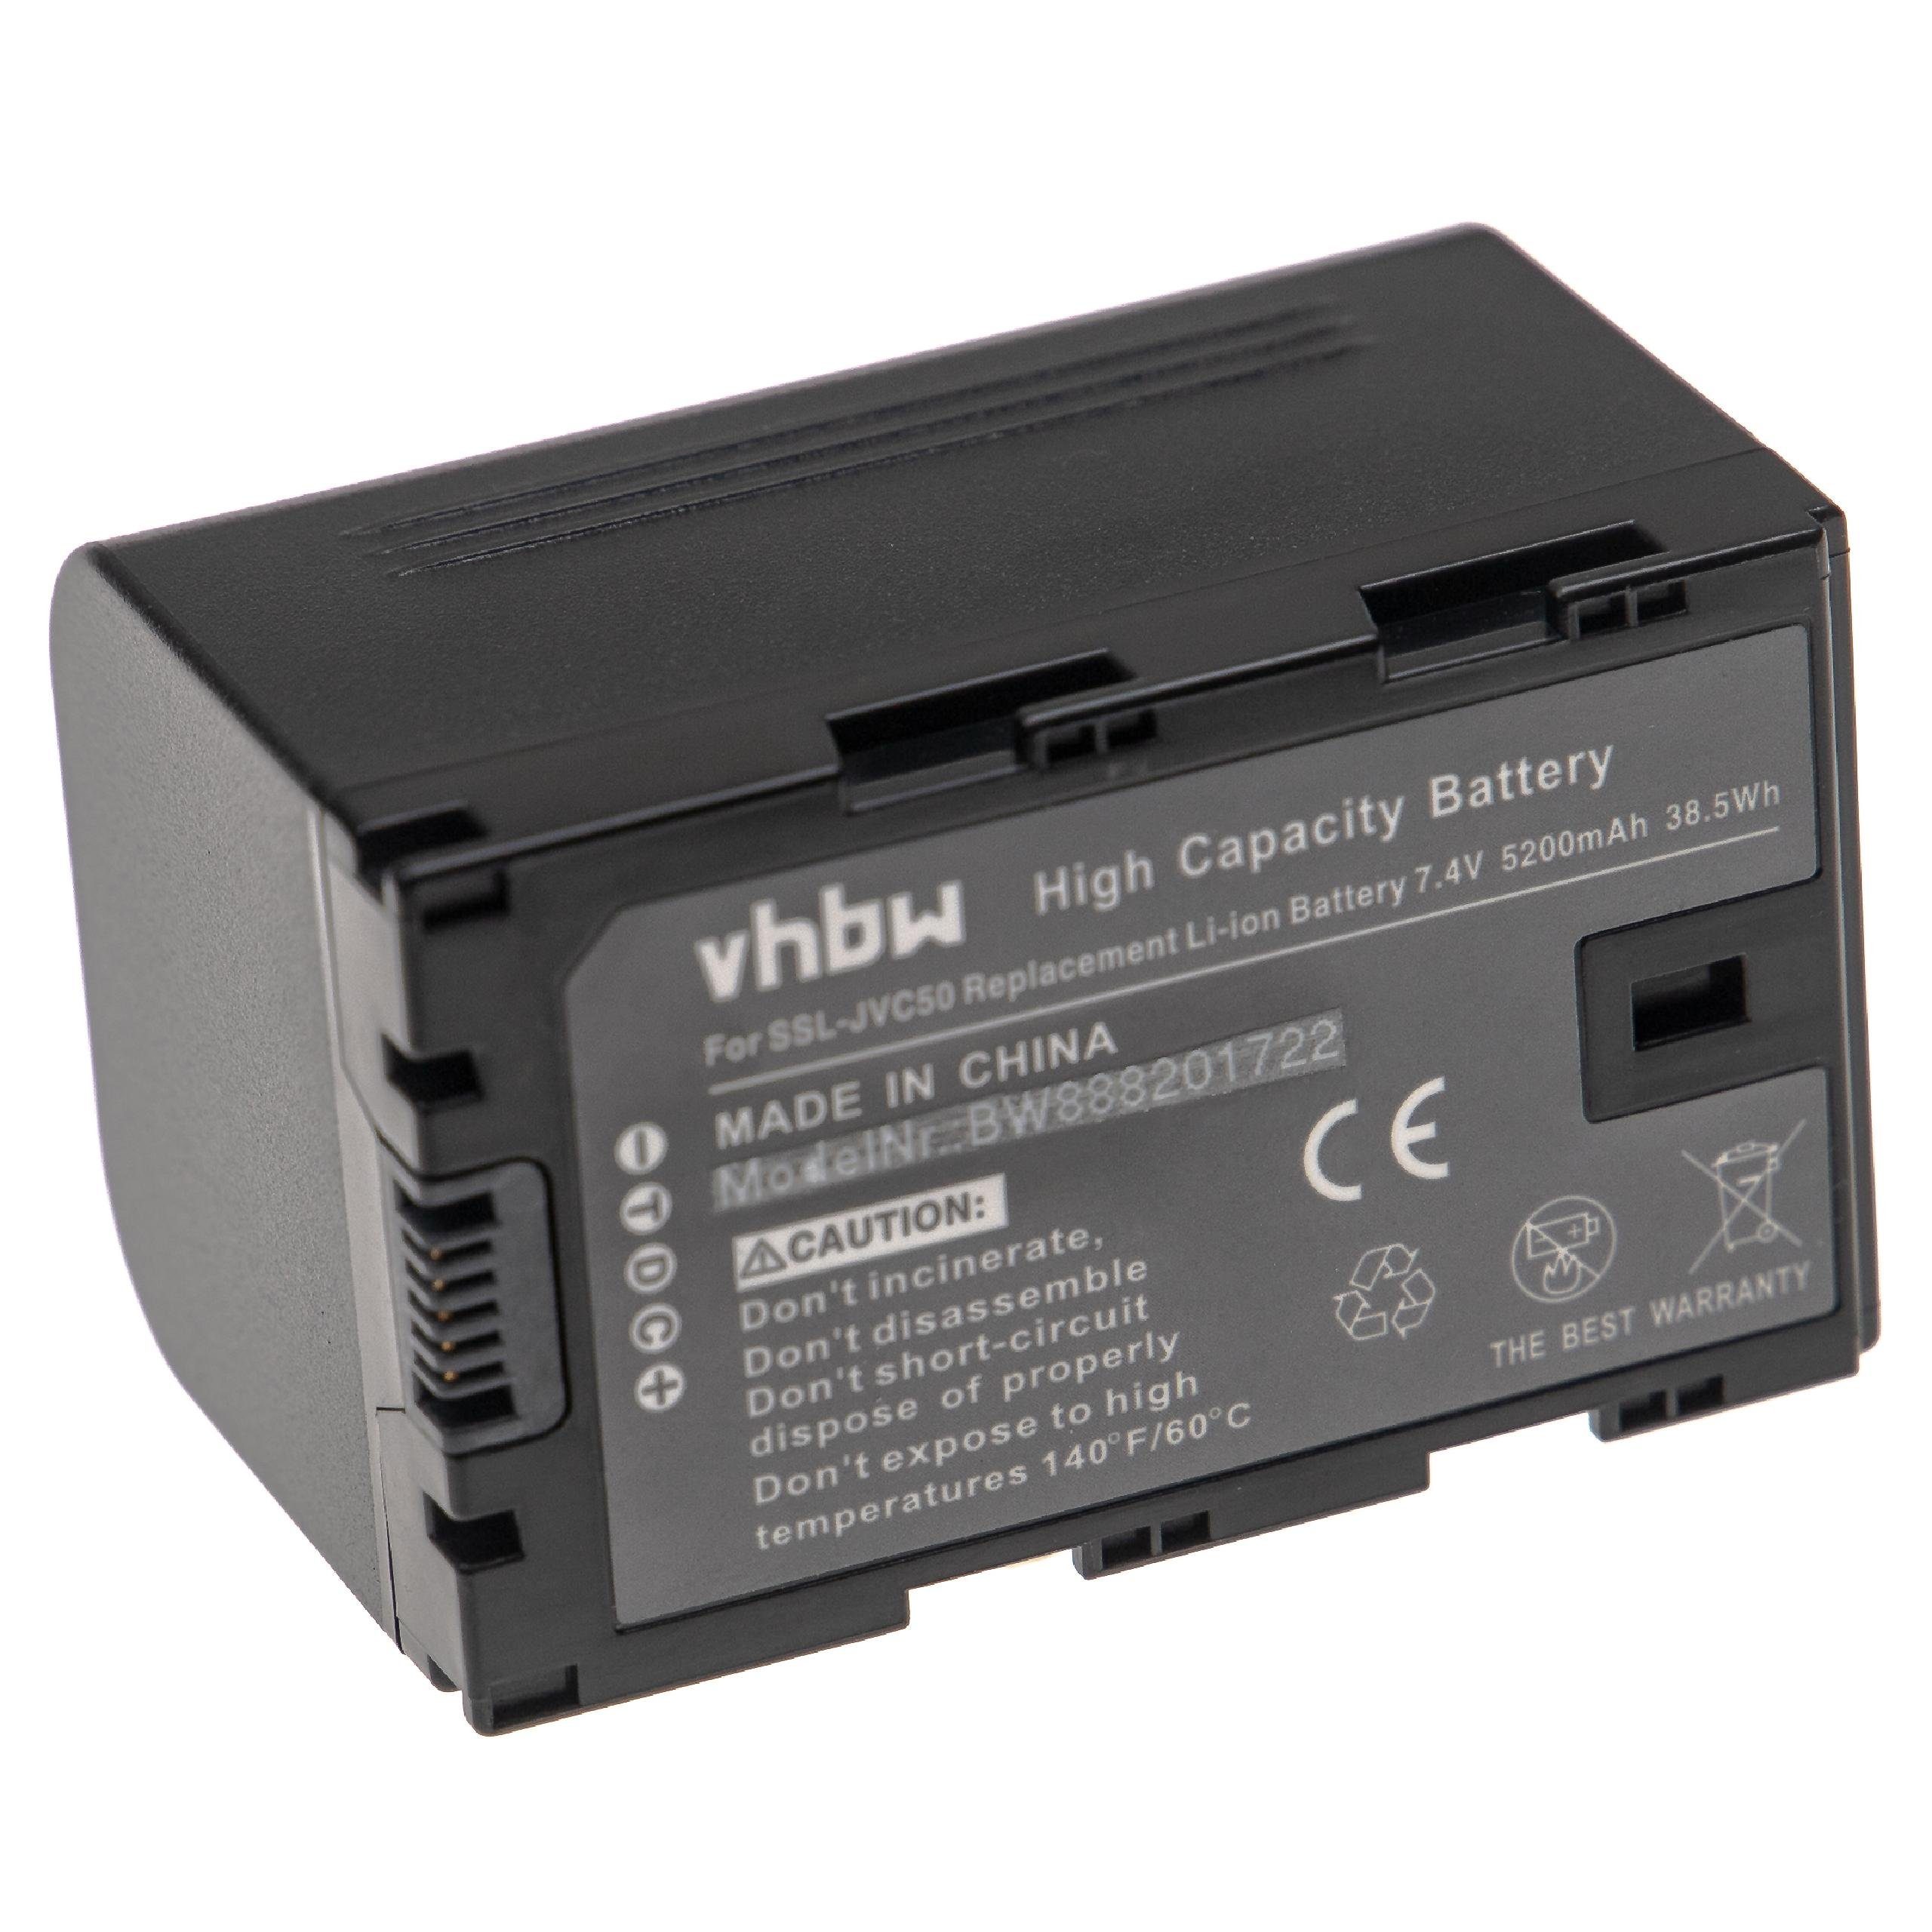 vhbw »passend für JVC GY-HM200E, GY-HM200ESB, GY-HM200, GY-HM600,  GY-HM600E, GY-HM600EC Camcorder Digital (5200mAh, 7,4V, Li-Ion)«  Kamera-Akku 5200 mAh